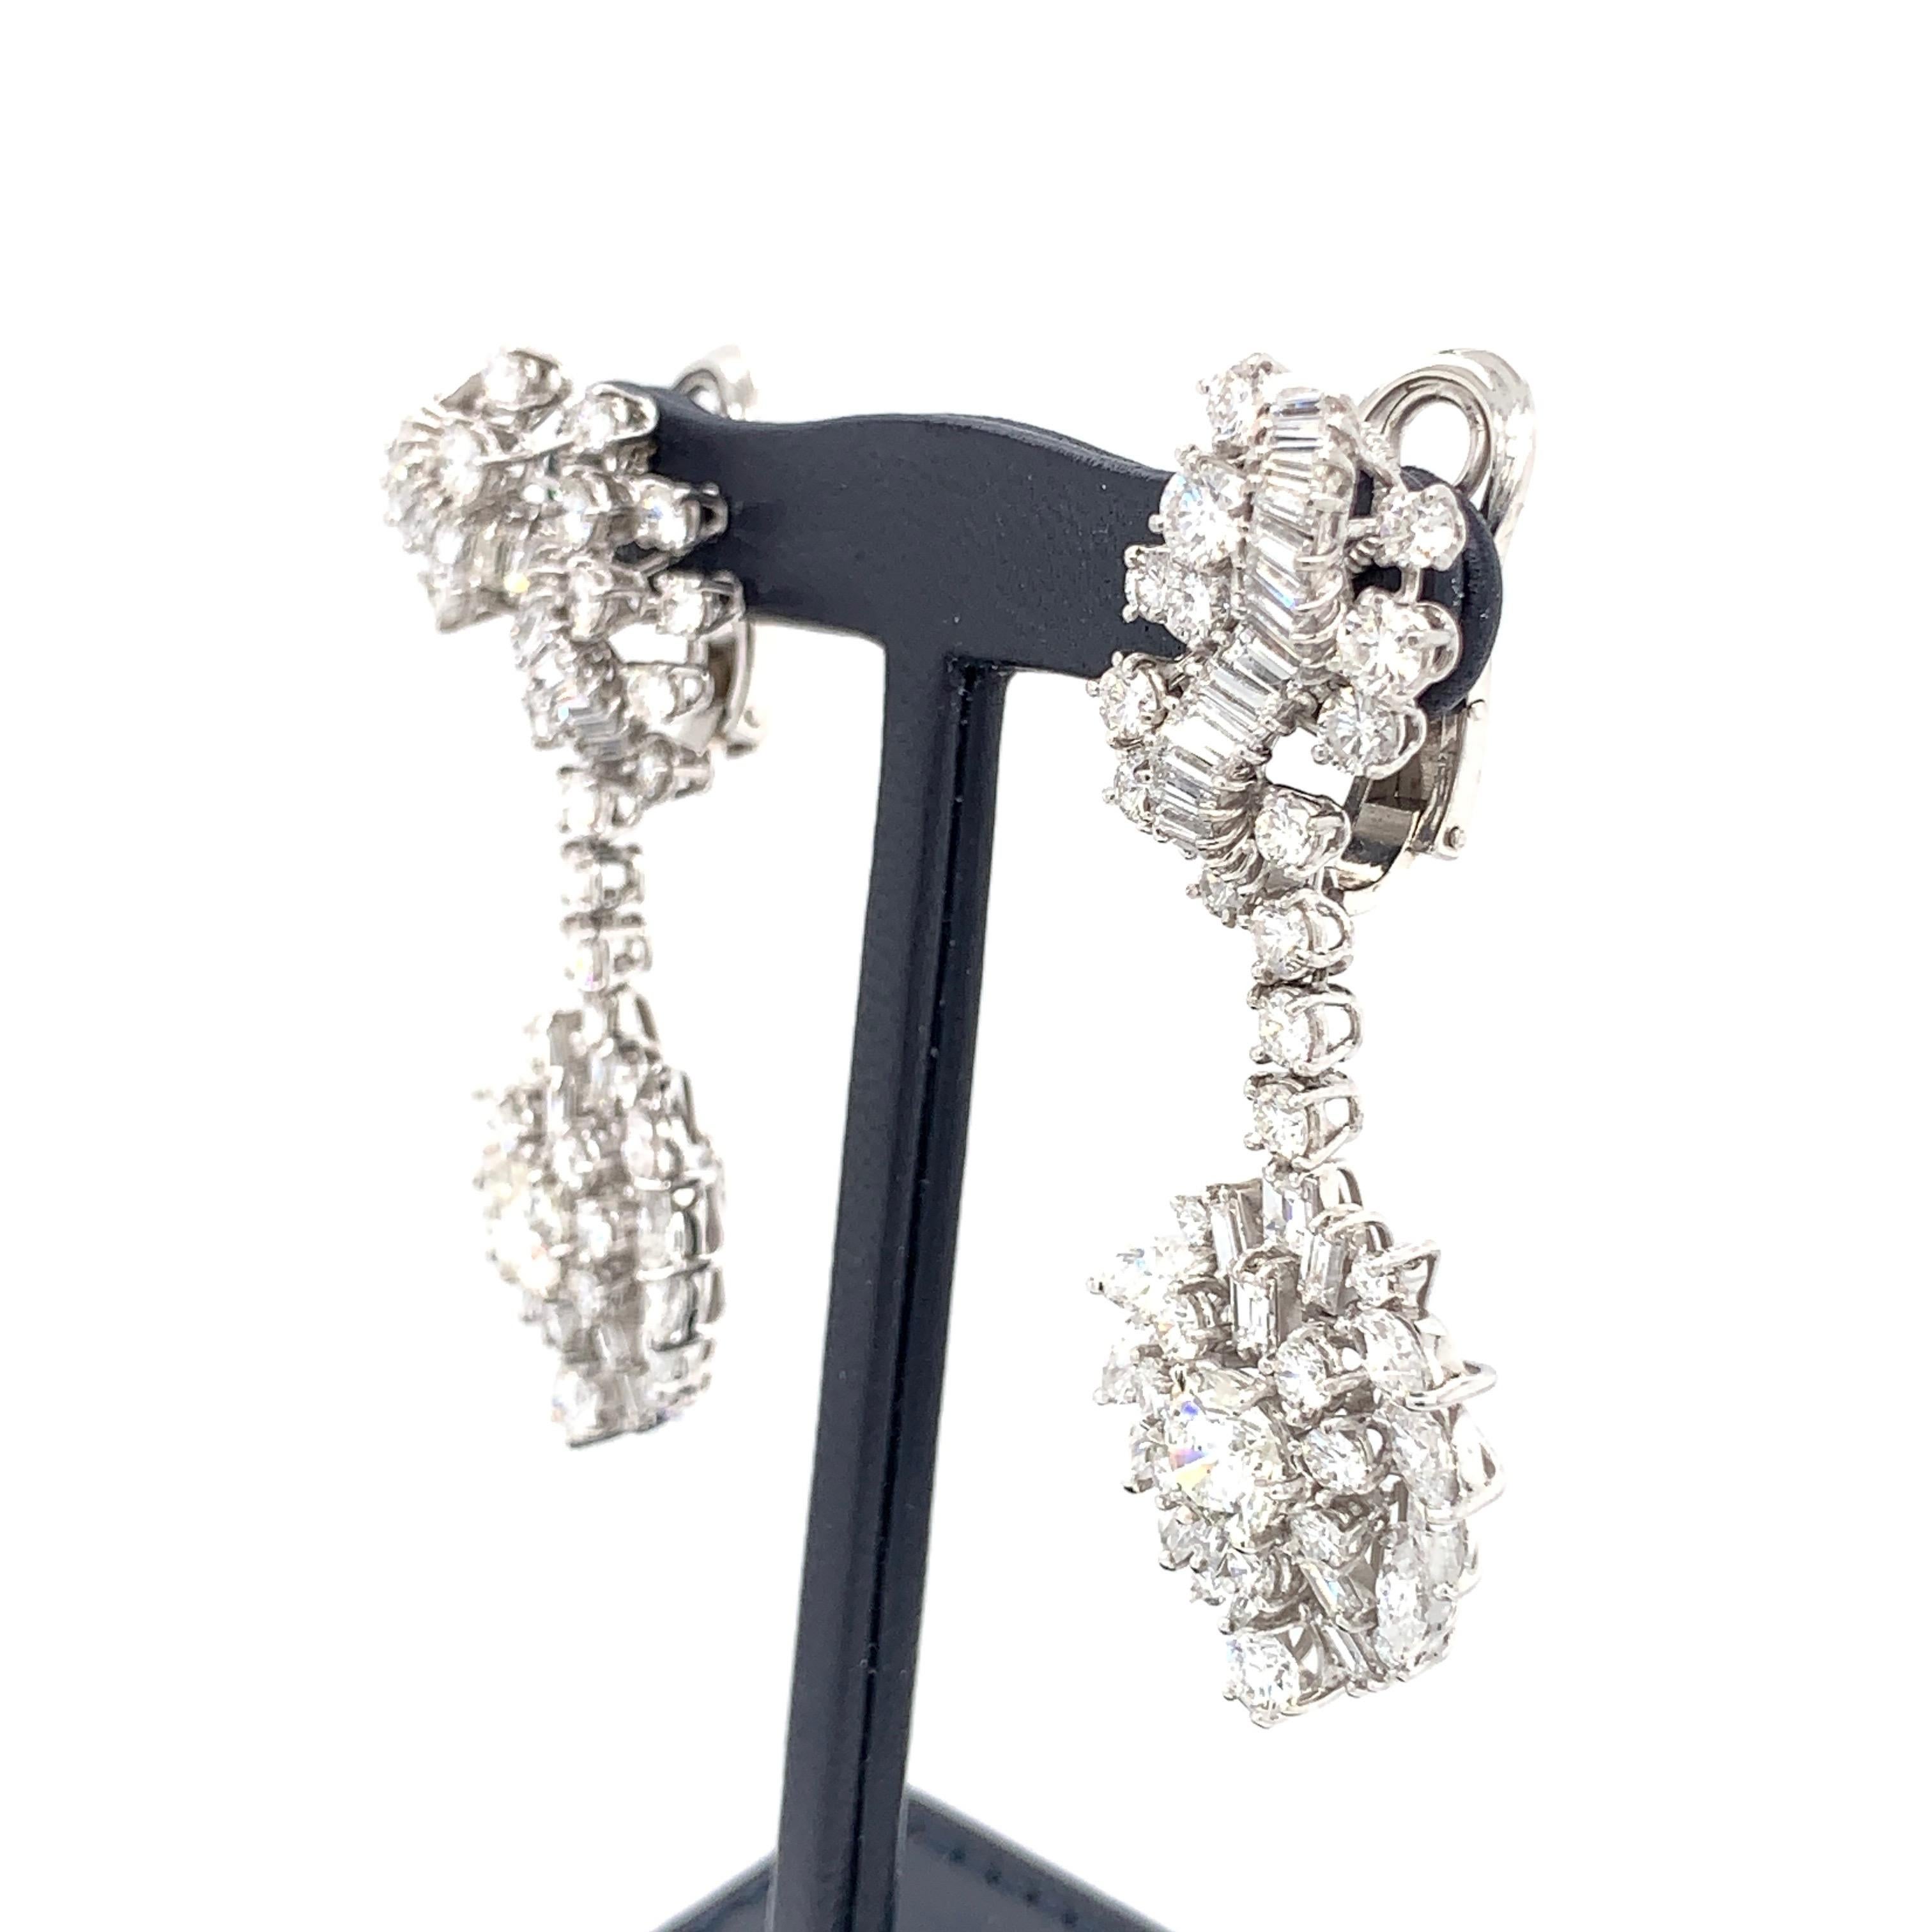 10 carat diamond earrings